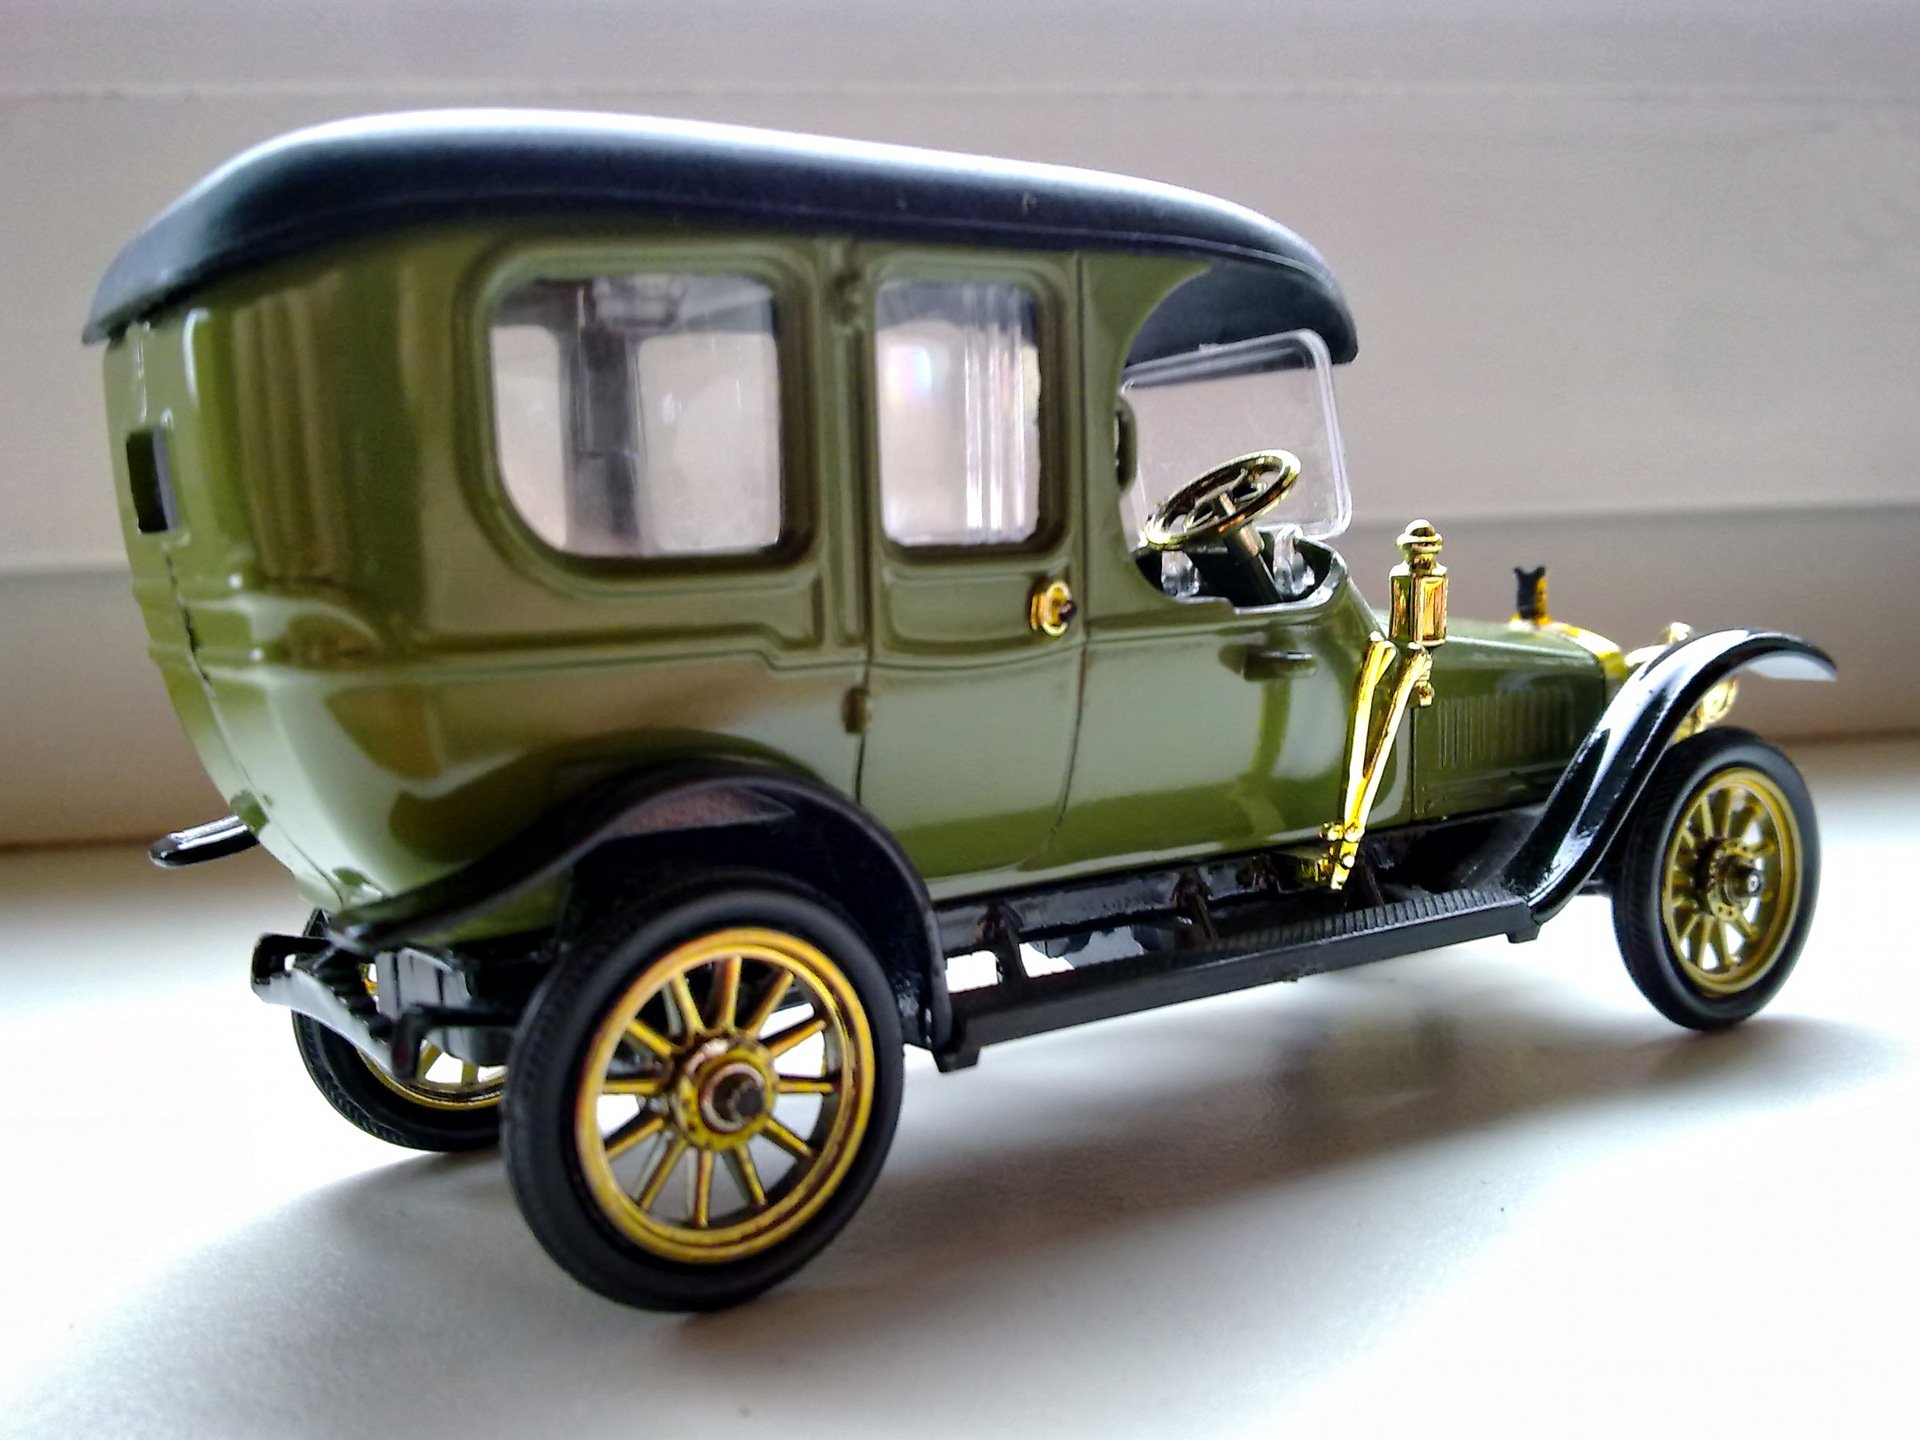 Автомобиль балт. Руссо Балт. Грузовик Руссо Балт. Автомобиль Руссо-Балт модель. Модель первого Руссо-Балт 1909 1:43.